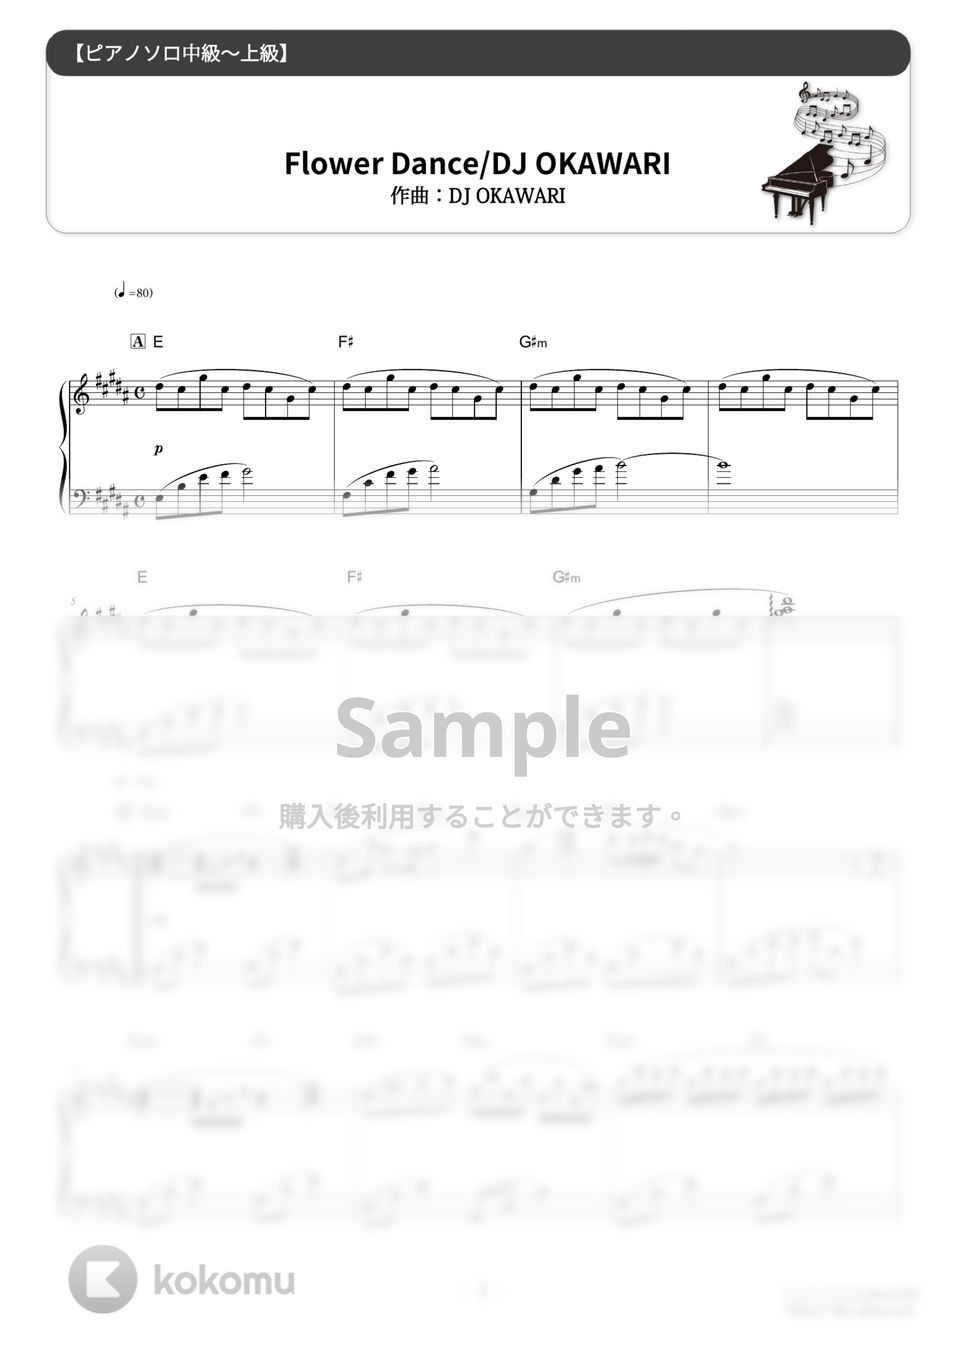 DJ OKAWARI - Flower Dance (難易度:★★★★☆) by Dさん